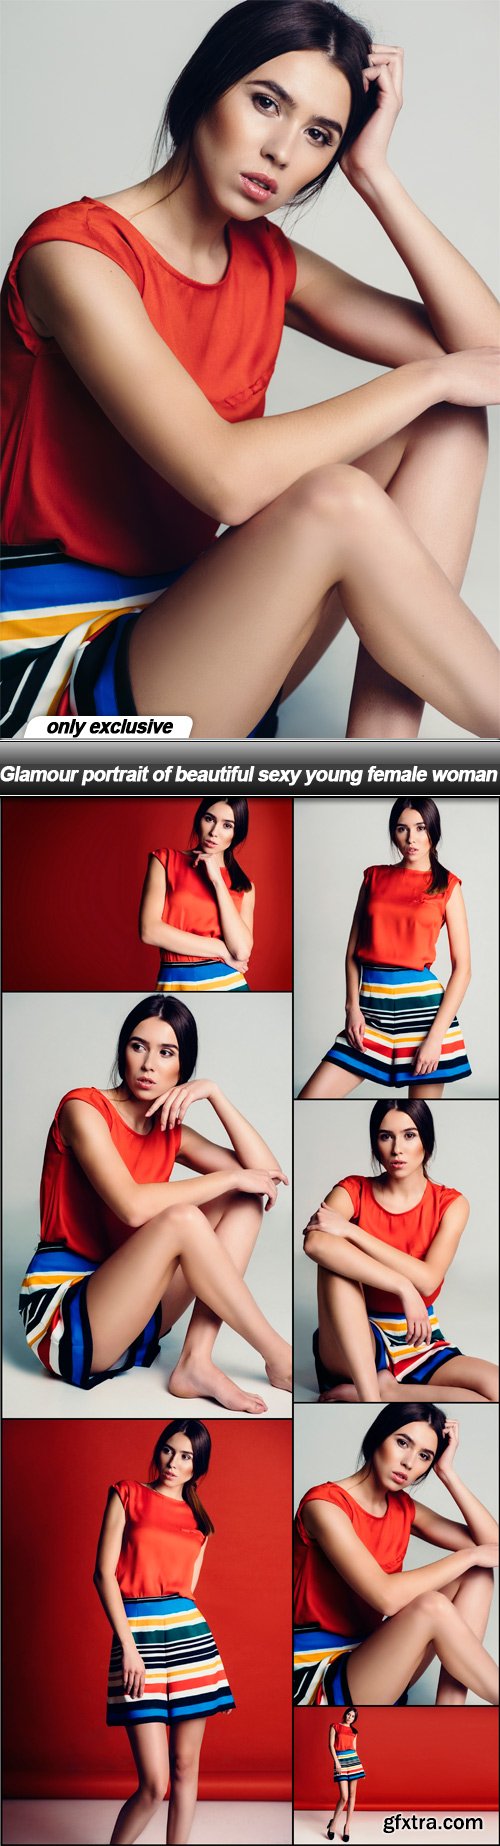 Glamour portrait of beautiful sexy young female woman - 7 UHQ JPEG